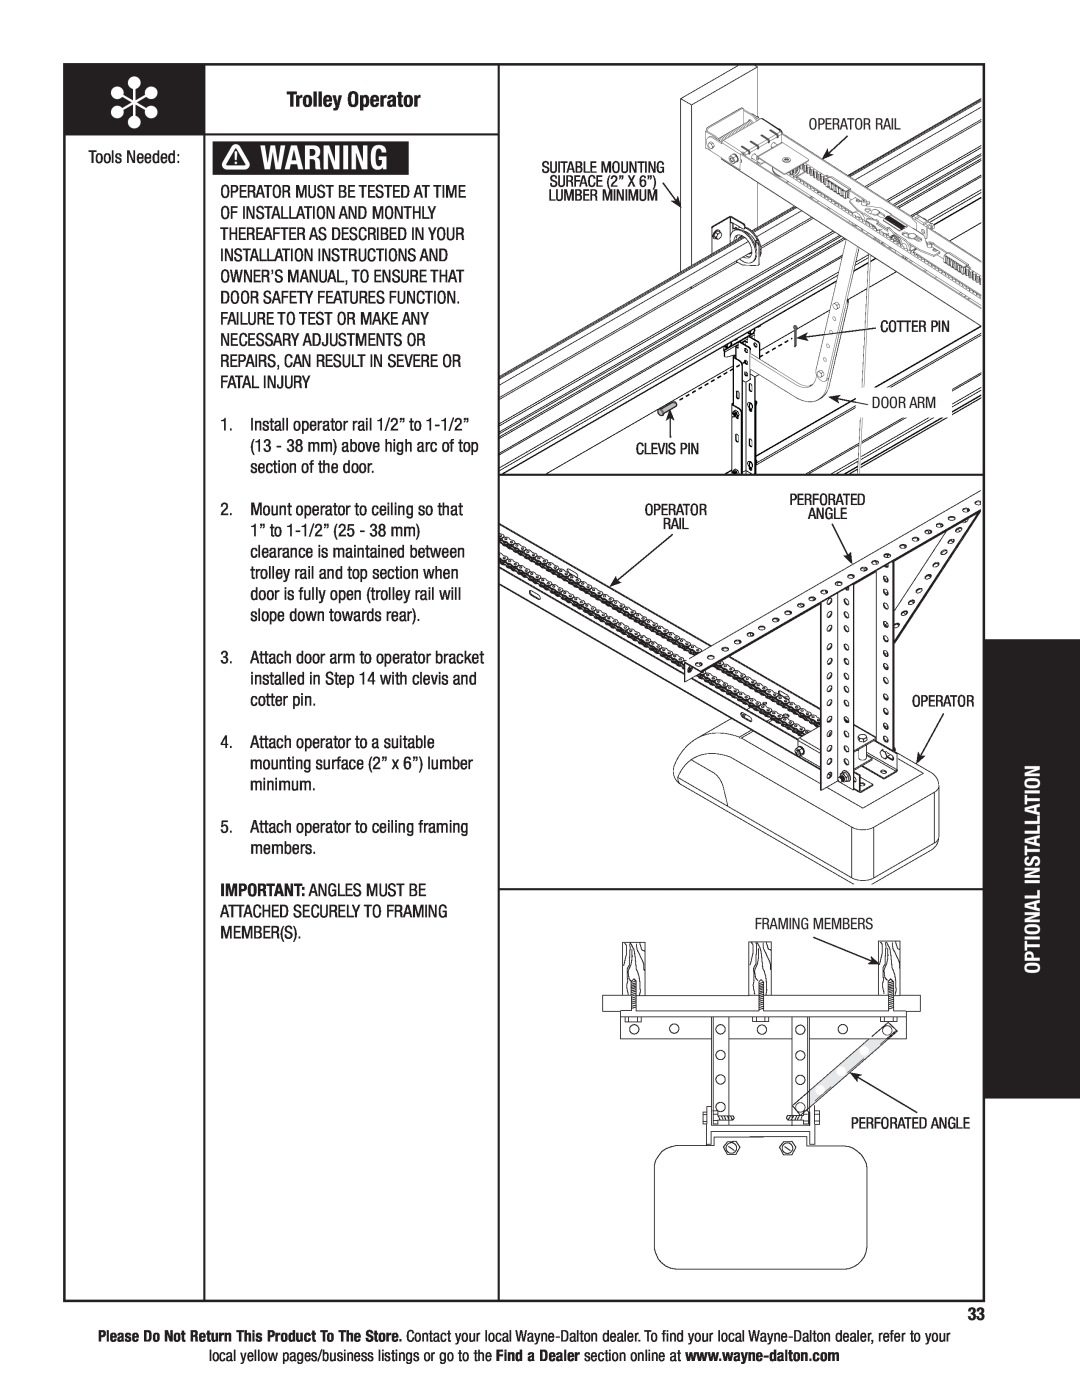 Wayne-Dalton 6100 installation instructions Trolley Operator, Optional INSTALLATION 